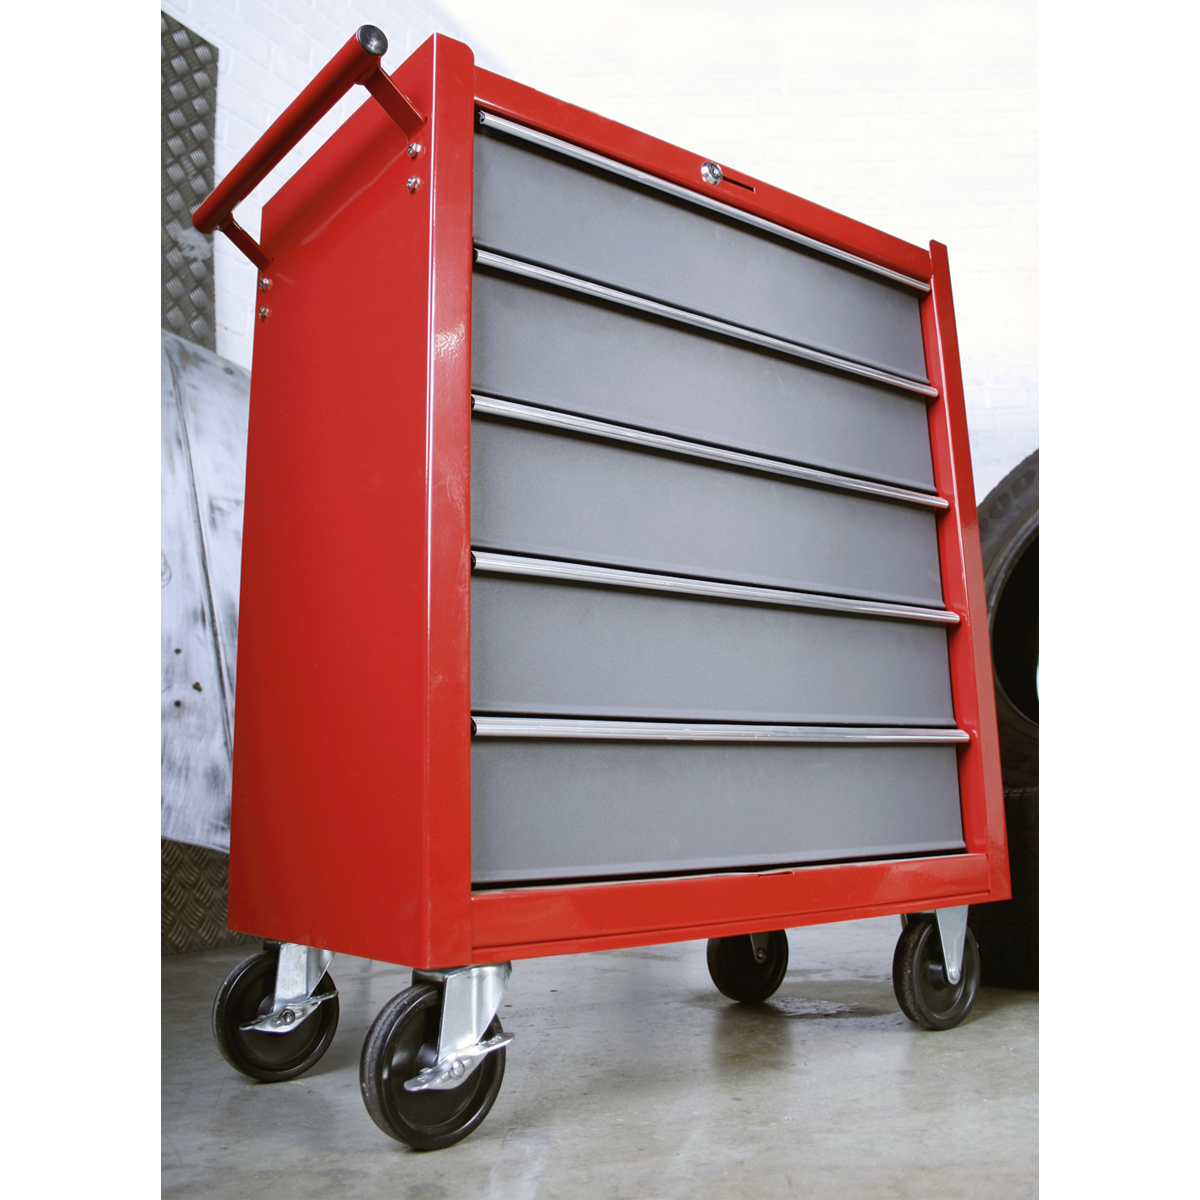 Sealey secure workshop roll cabinet storage